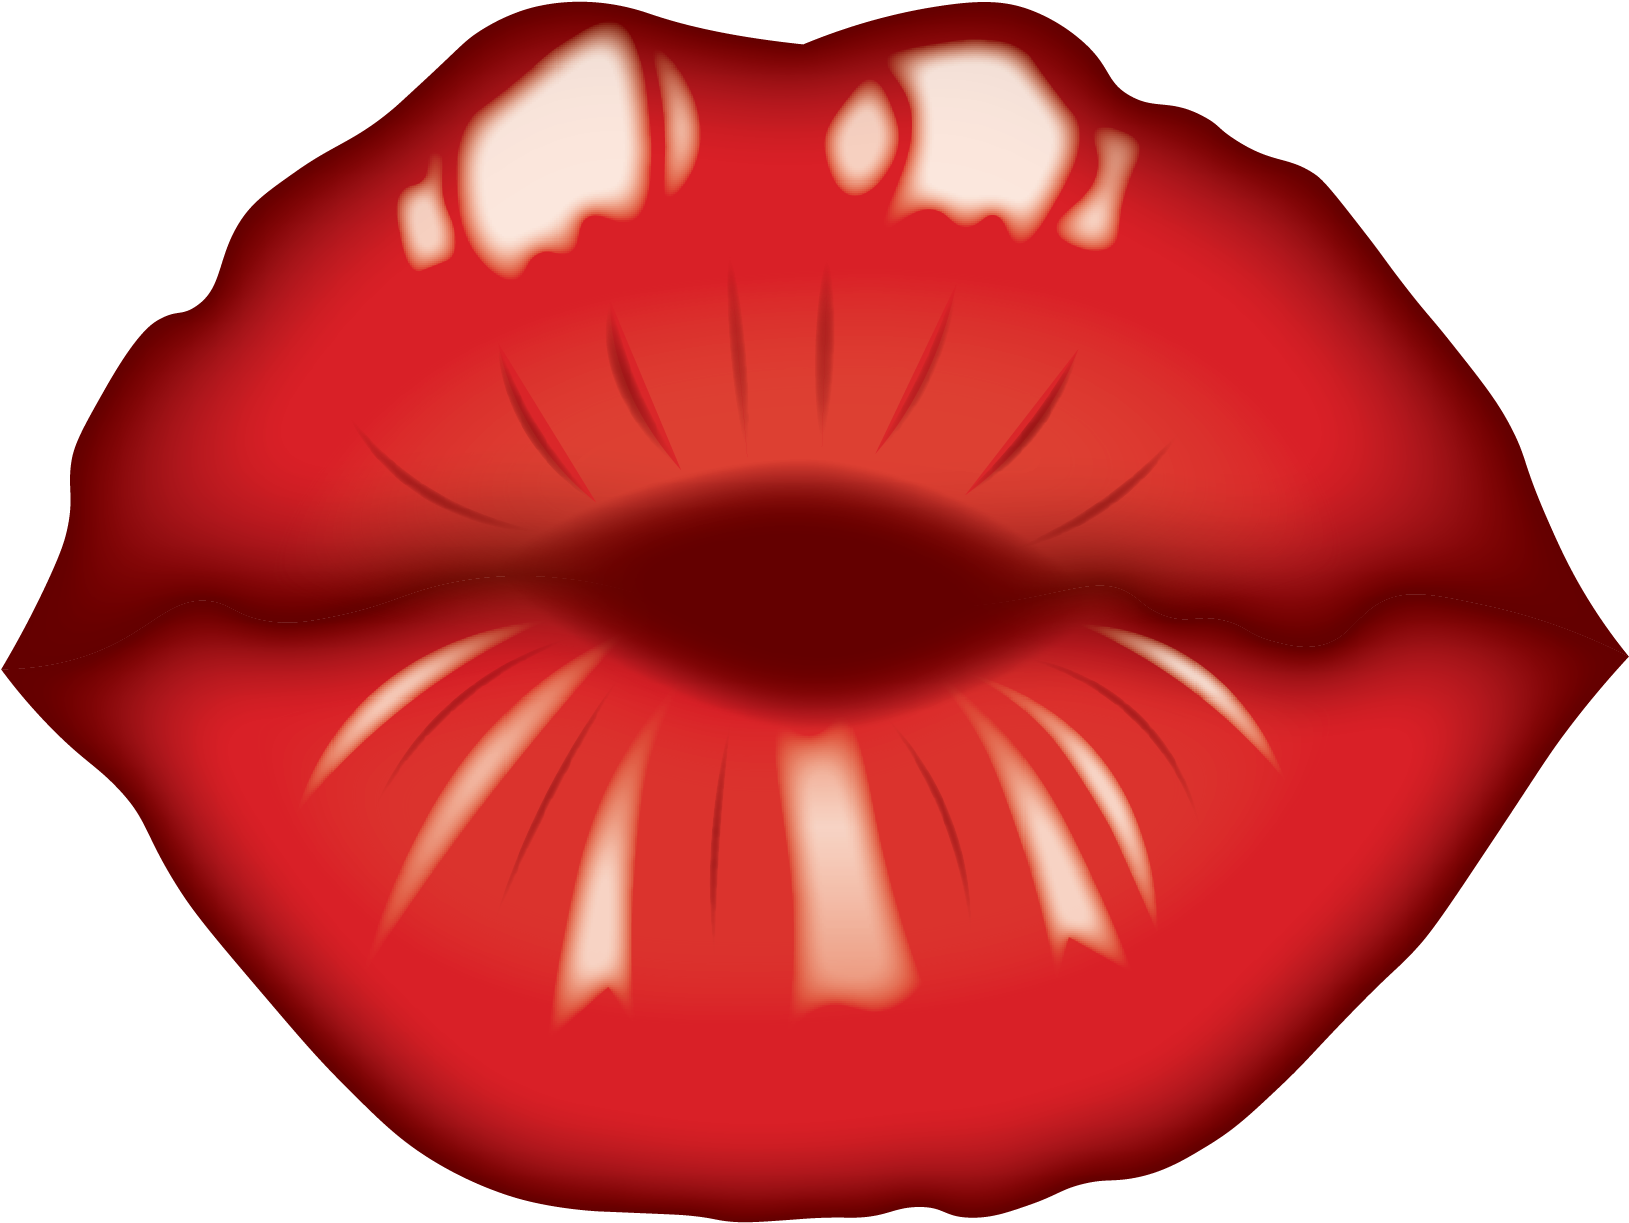 Lips Clipart Project - Lip Gloss (1728x1728)